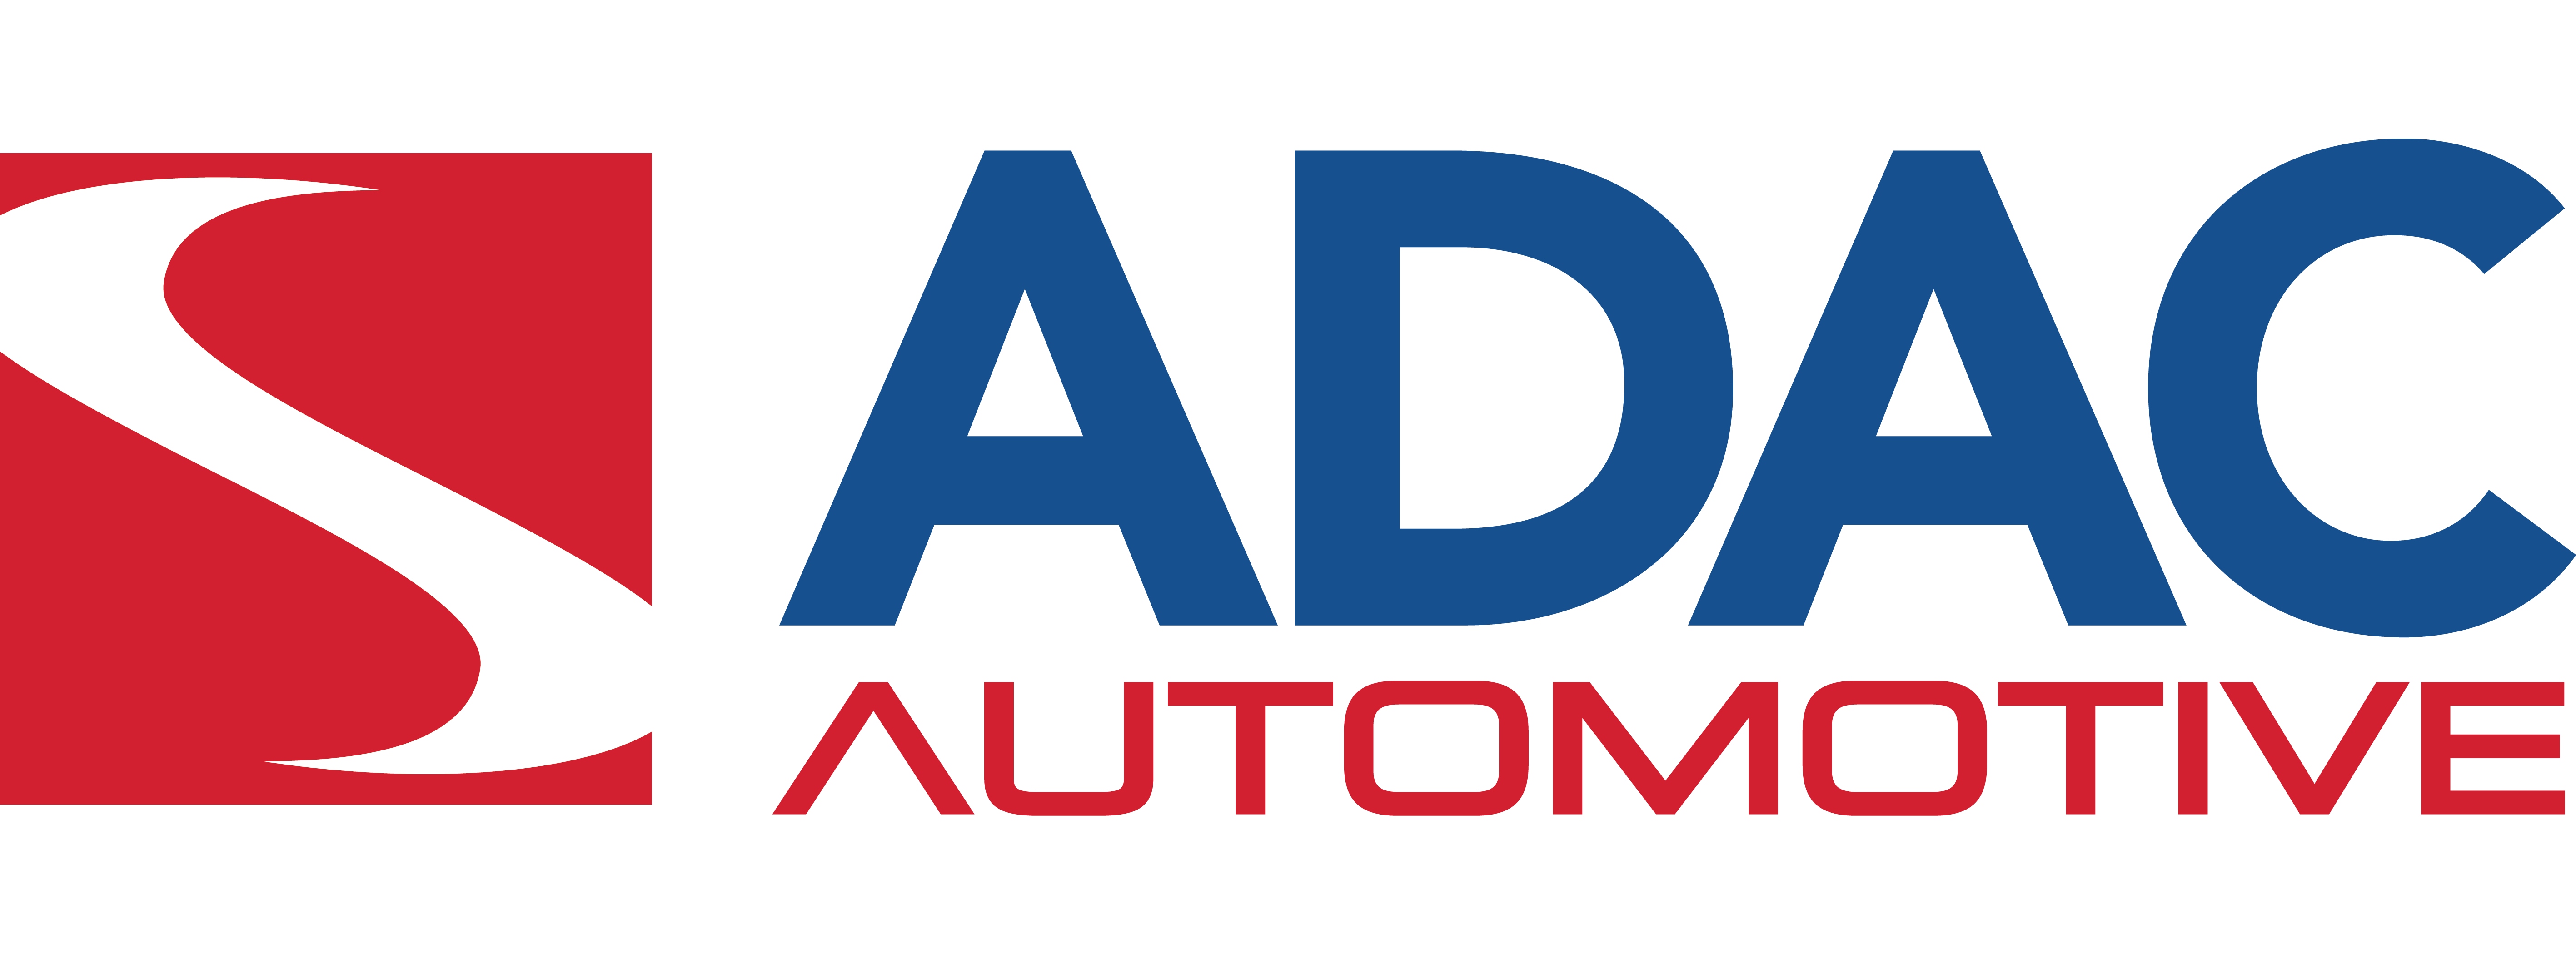 Adac Automotive - Adac, Transparent background PNG HD thumbnail